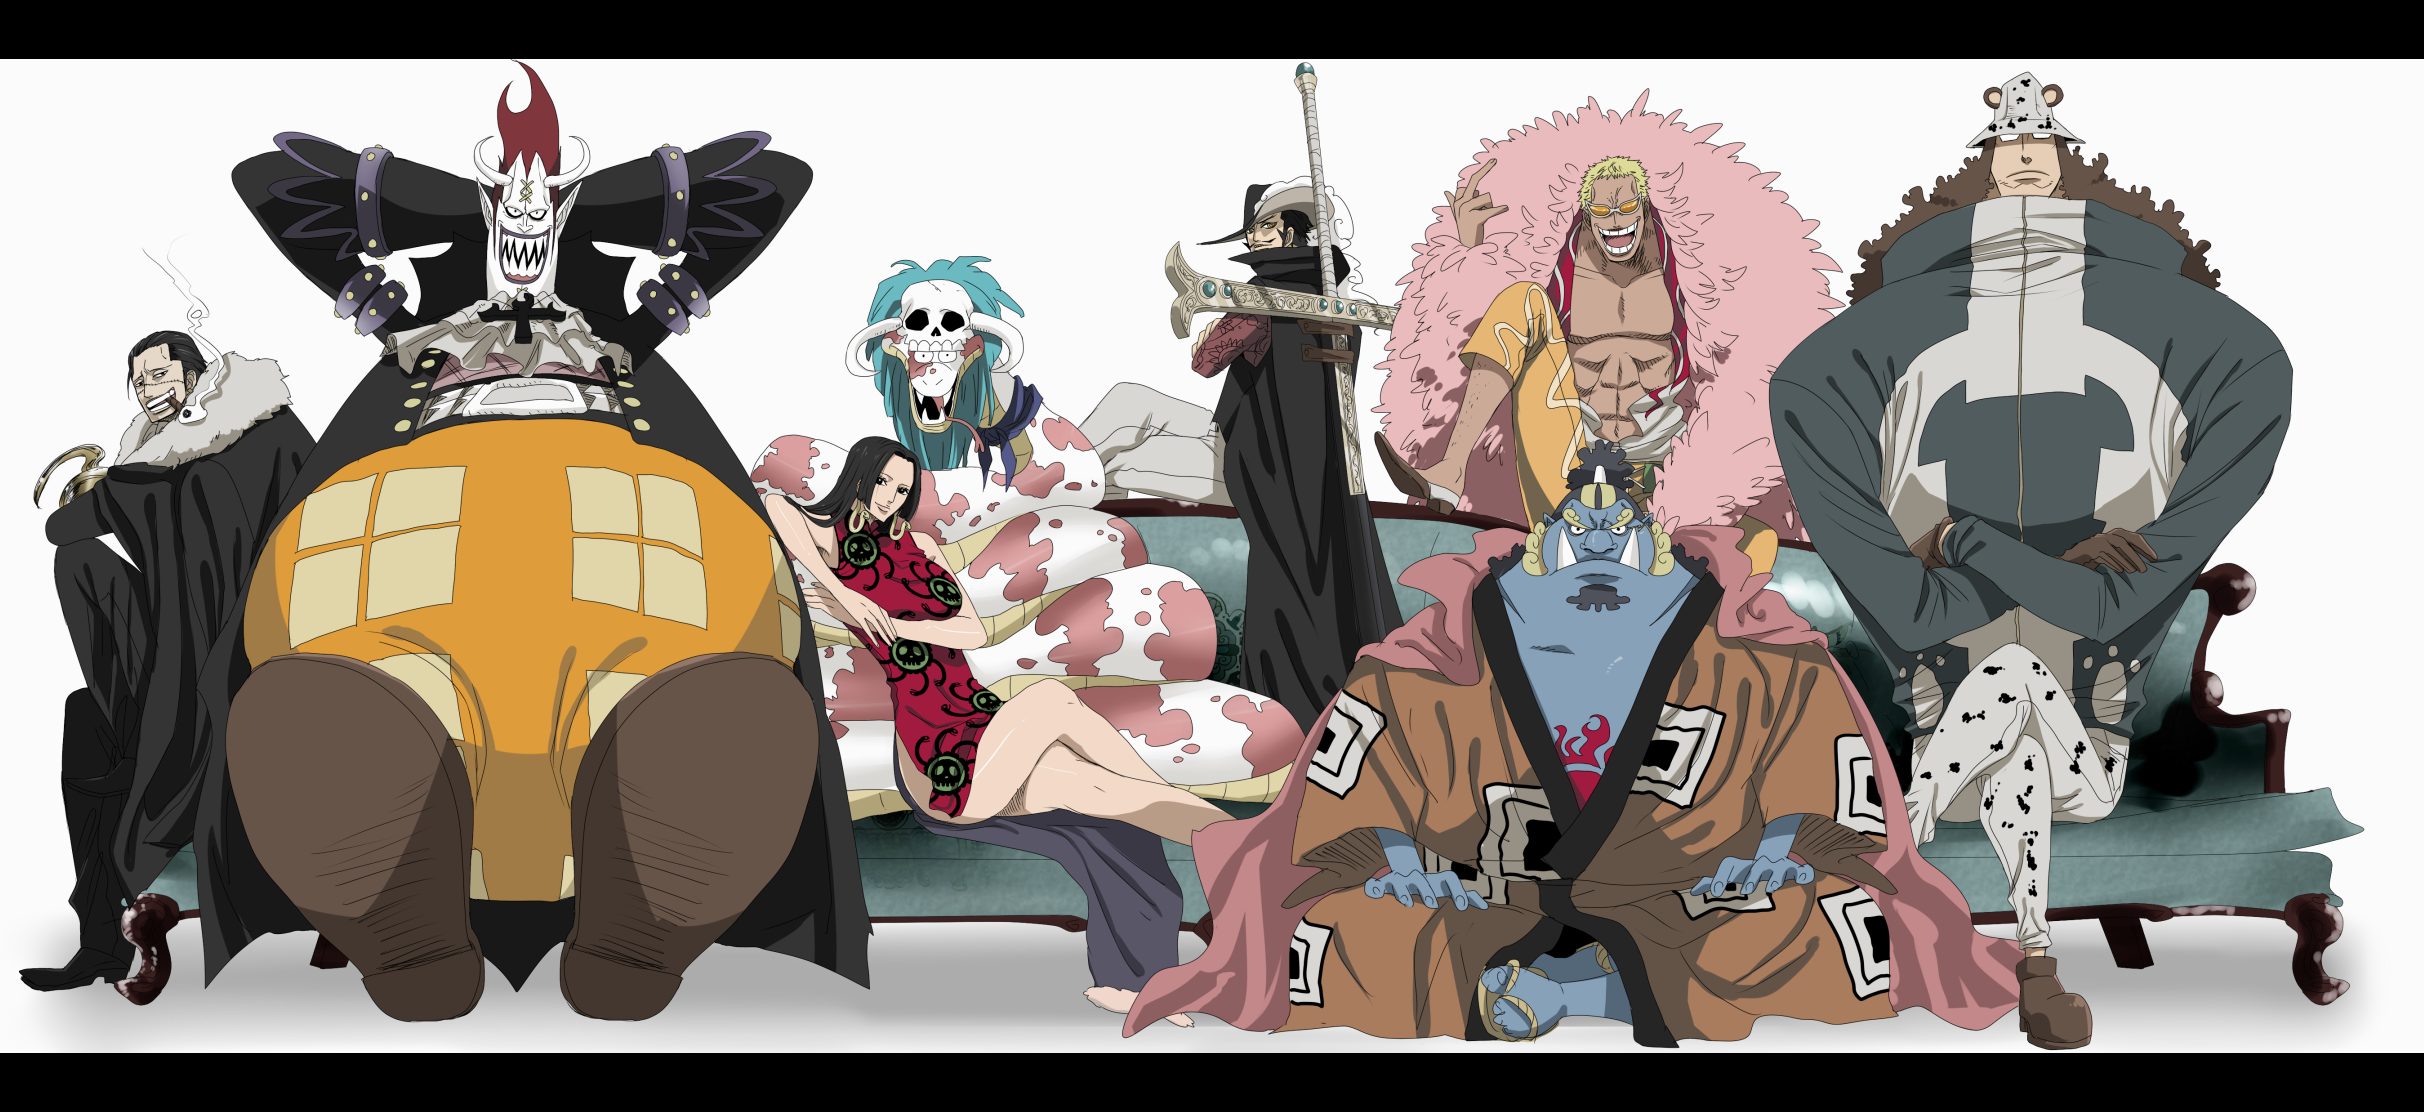 One Piece (anime), Boa Hancock, anime, Crocodile (One Piece), Gecko Moria, Donquixote Doflamingo, Bartholomew Kuma, Jinbei (One Piece), Dracule Mihawk - desktop wallpaper